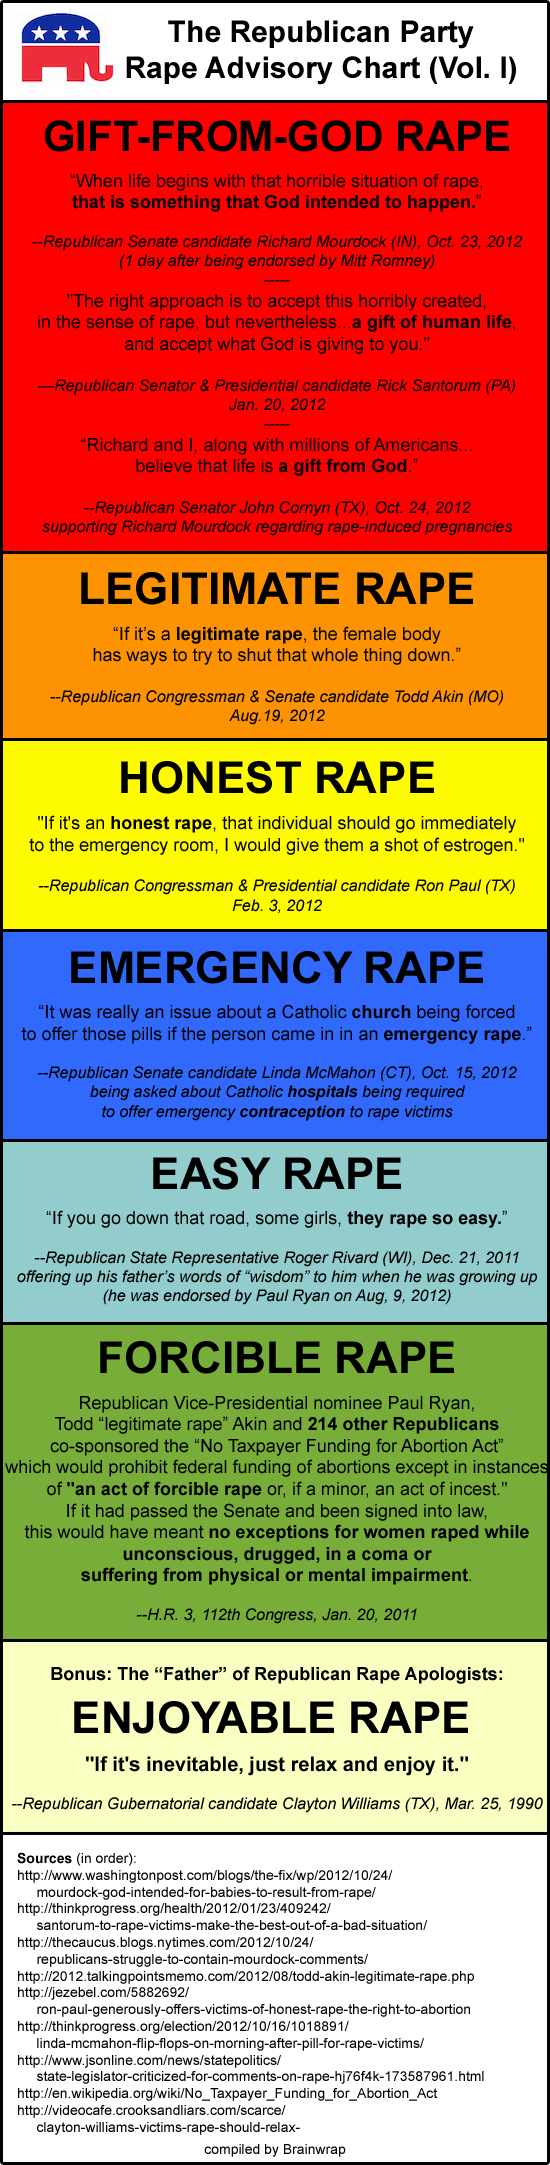 The Republican Party Rape Advisory Chart: Volume 1